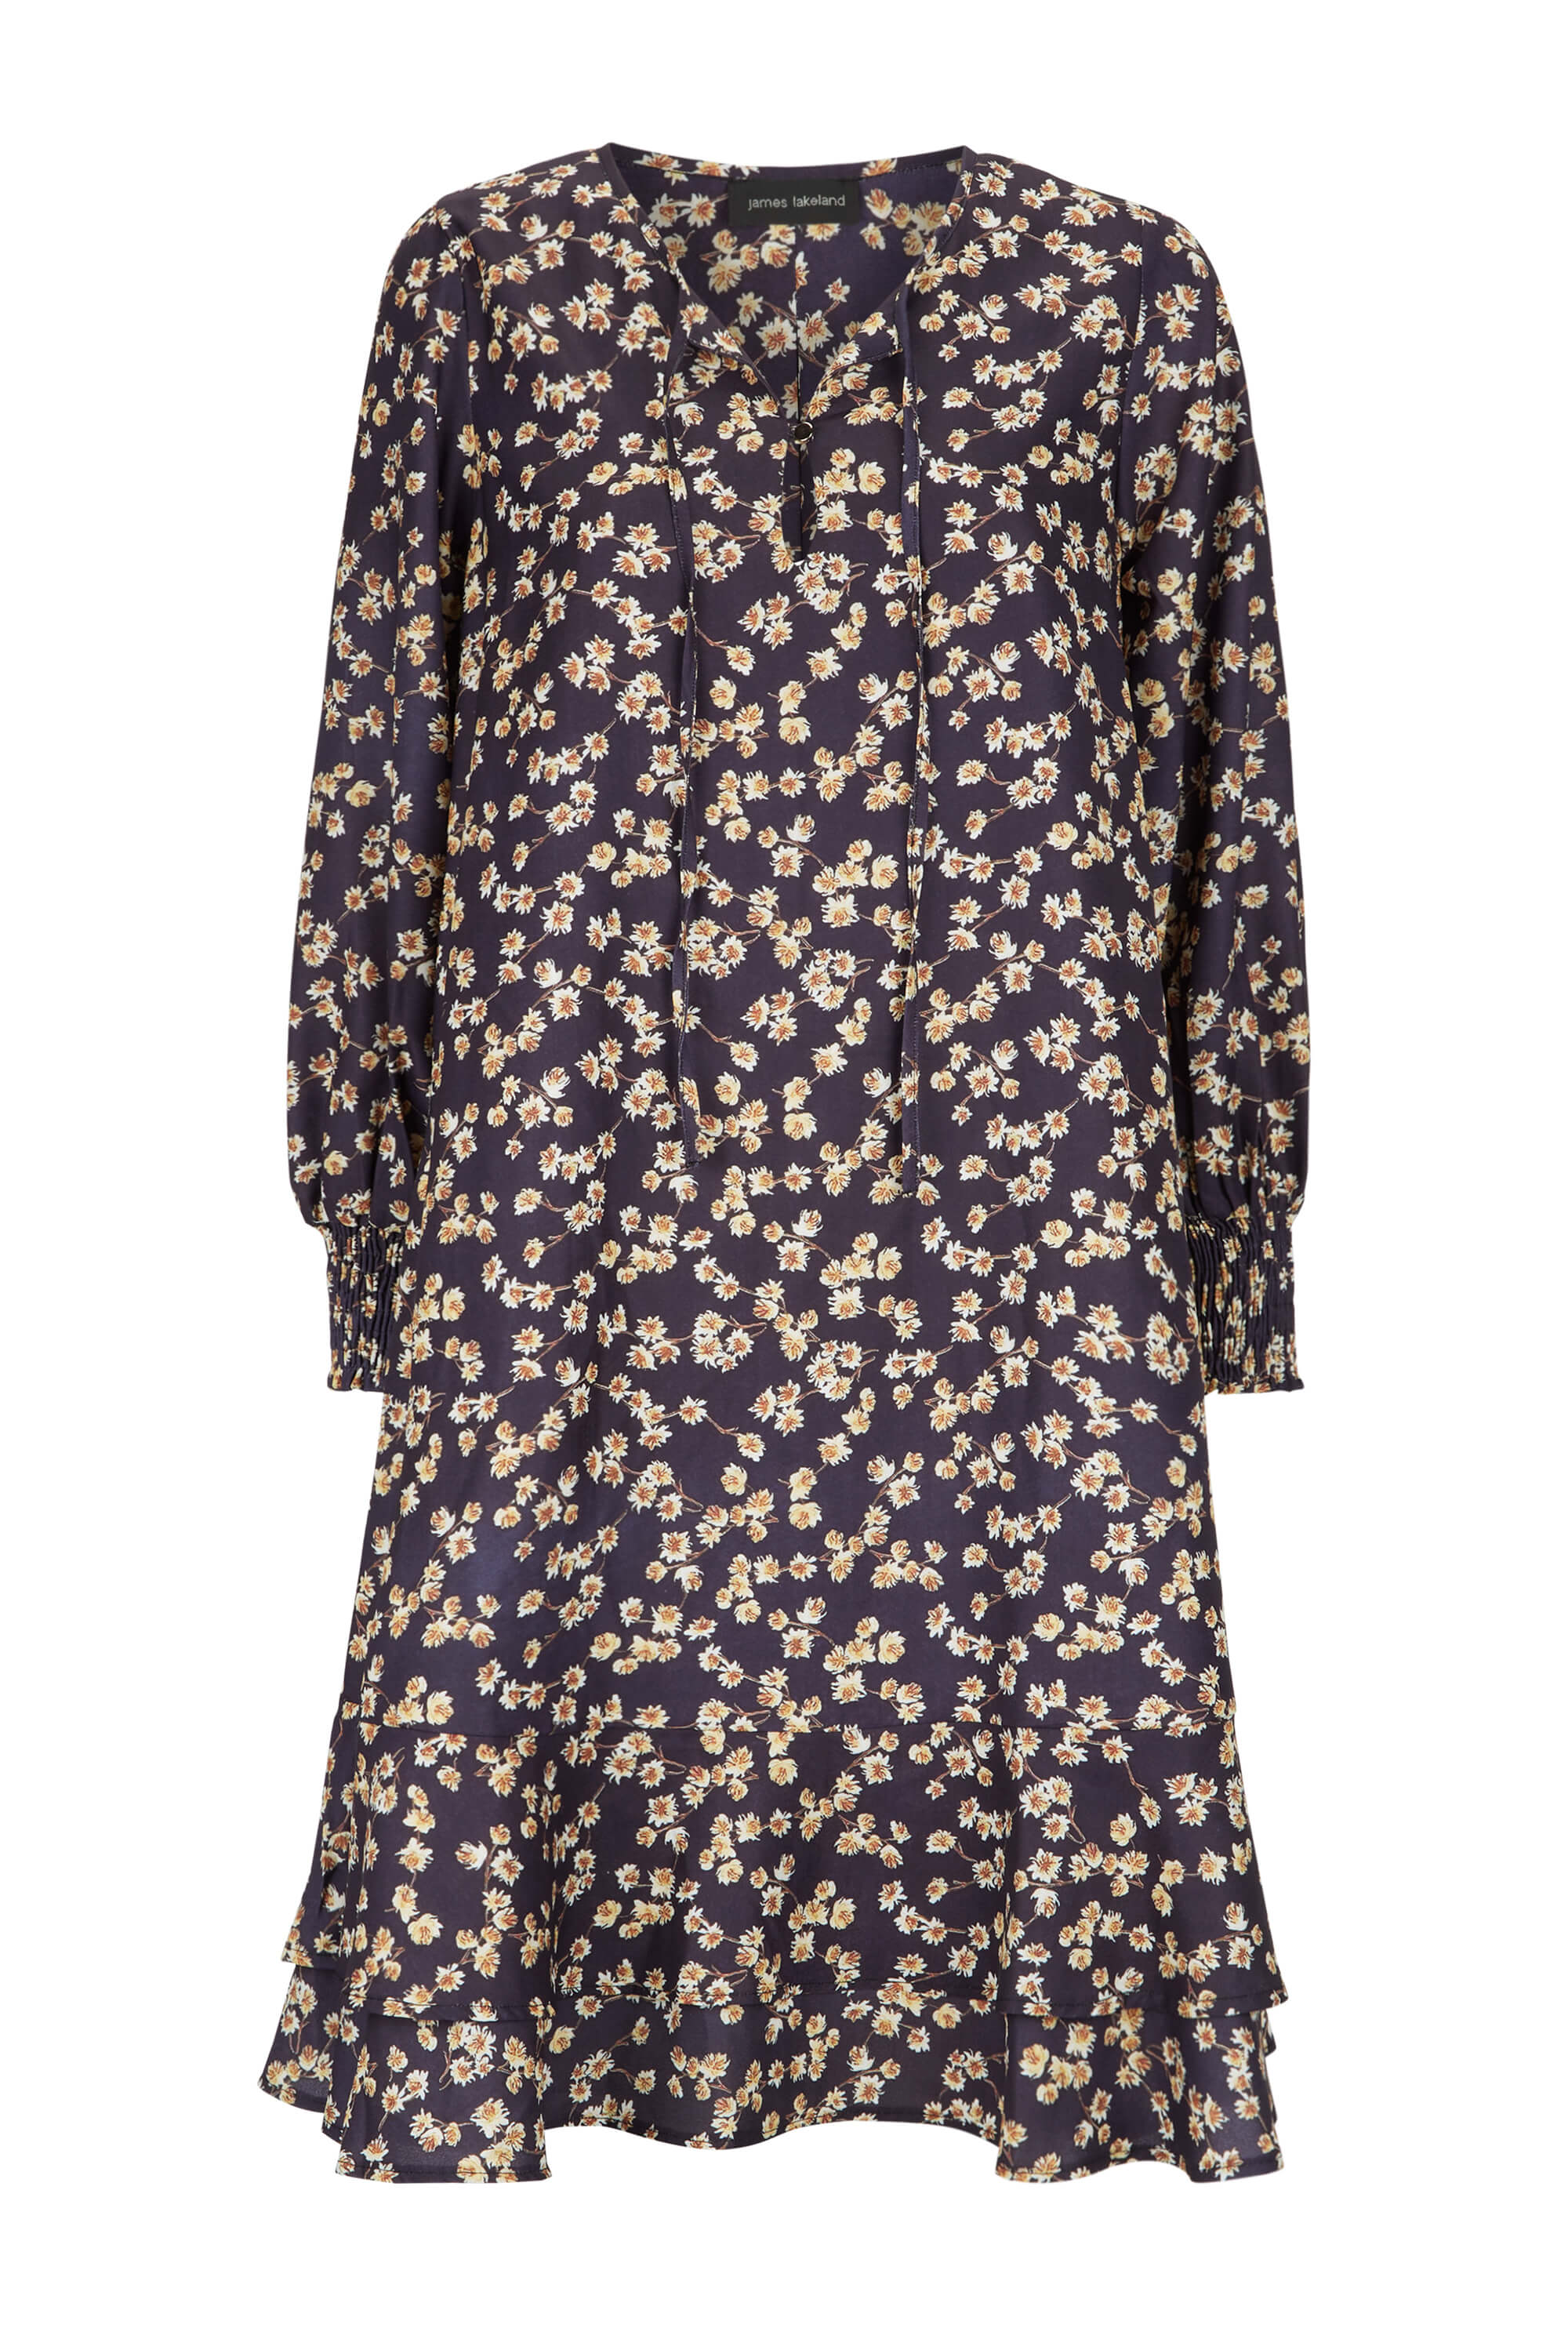 James Lakeland Women's Daisy Print Dress - Blue In Multi